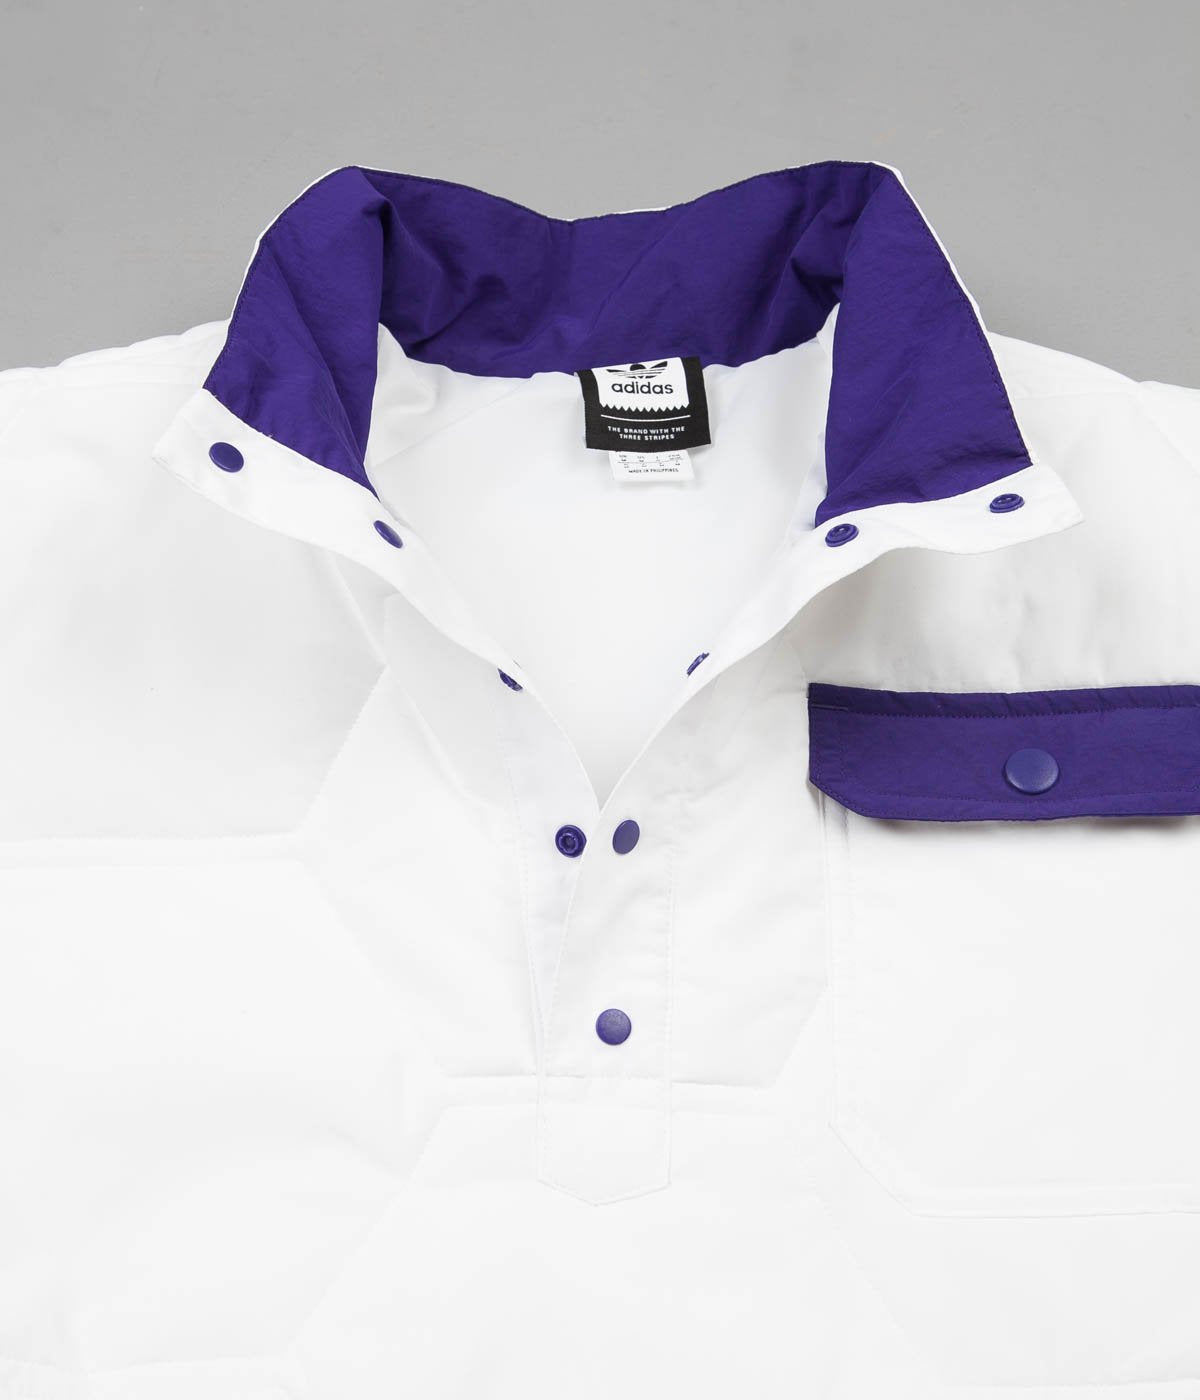 Adidas x Hardies Jacket White/Violet